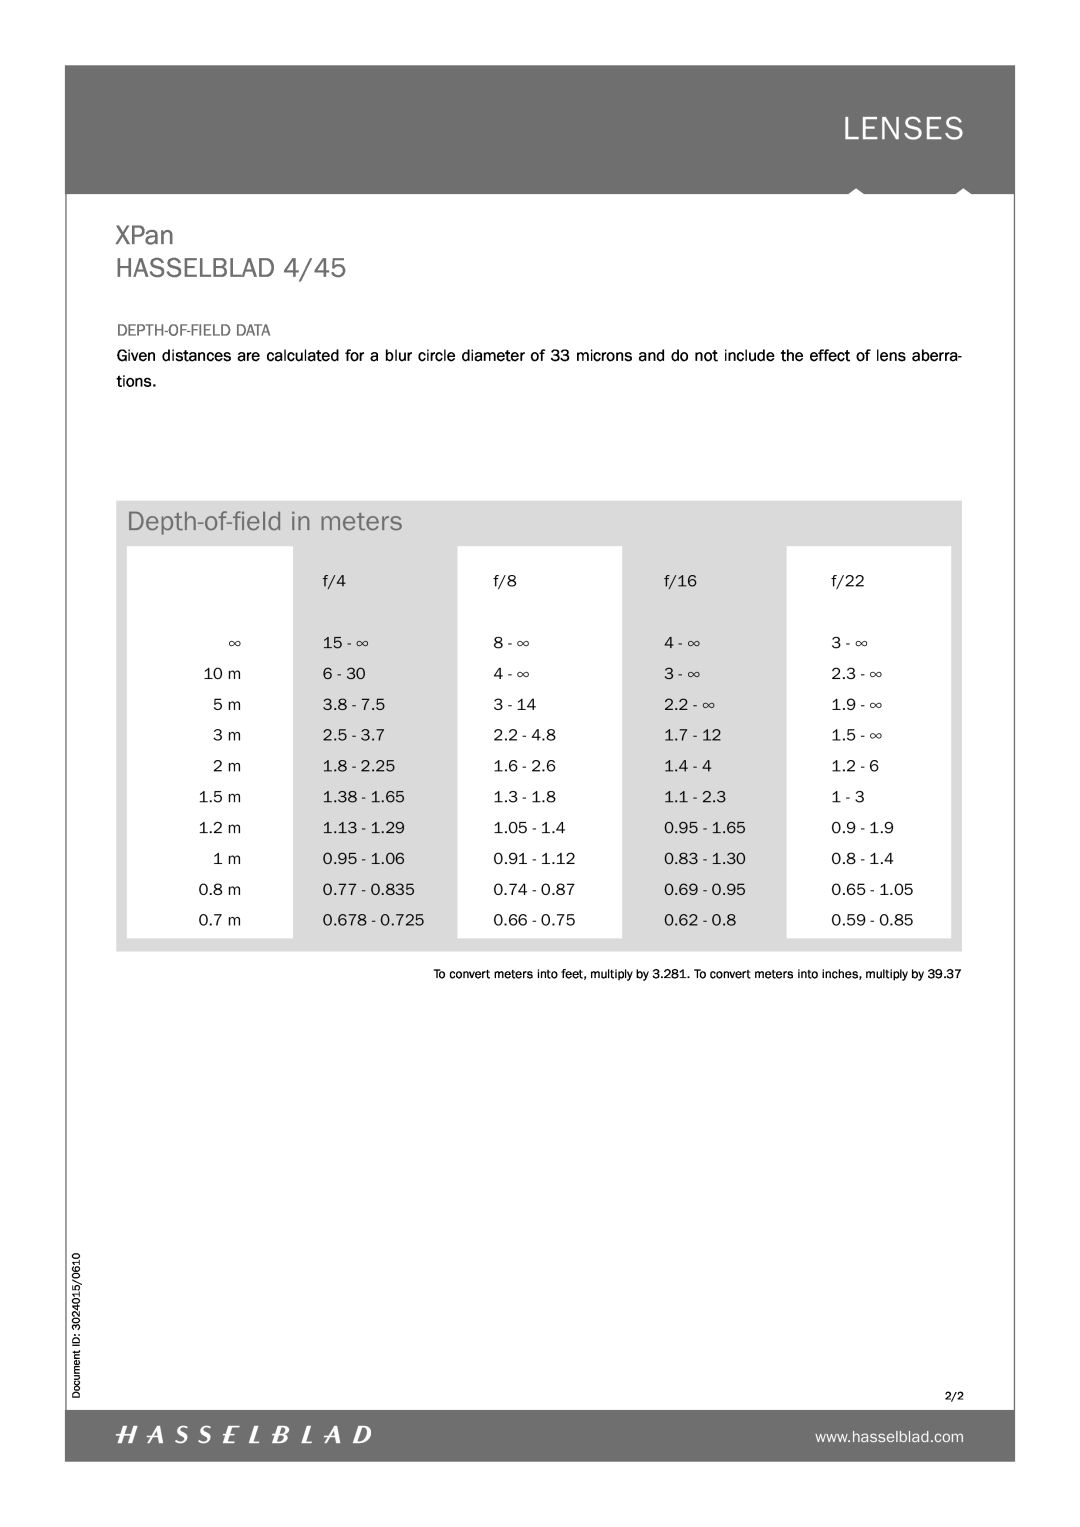 Hasselblad manual Depth-of-ﬁeld in meters, Depth-Of-Field Data, Lenses, XPan HASSELBLAD 4/45, Document ID 3024015/0610 